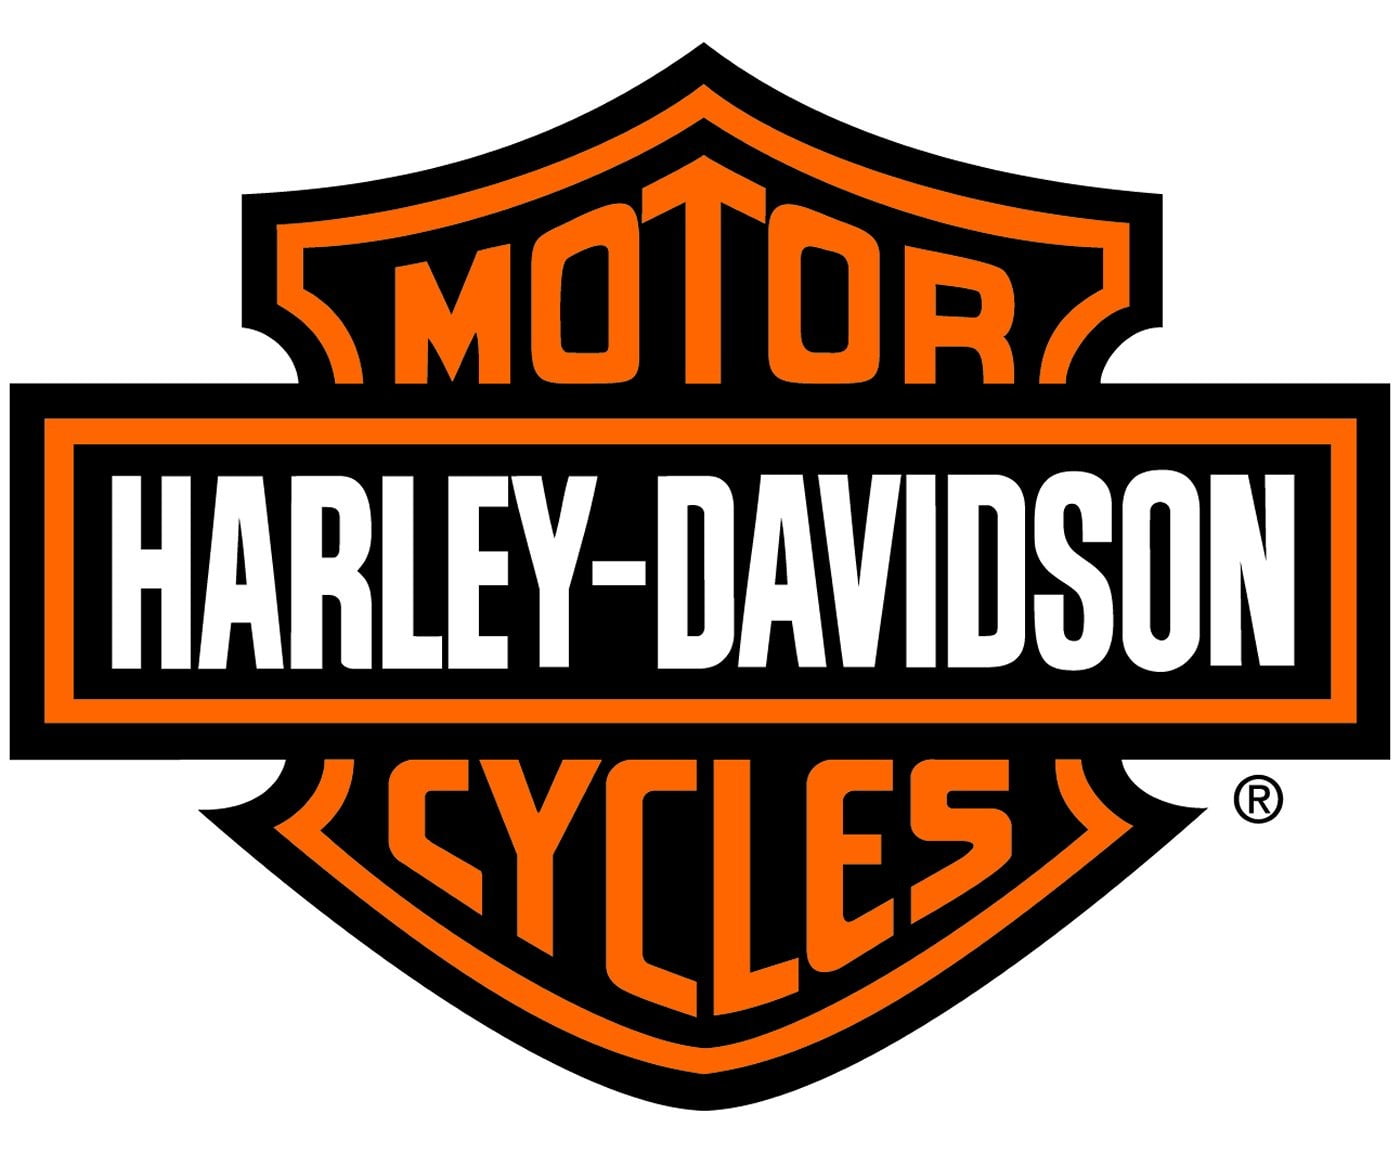 Harley-Davidson, logo, communication, text, sign, single word